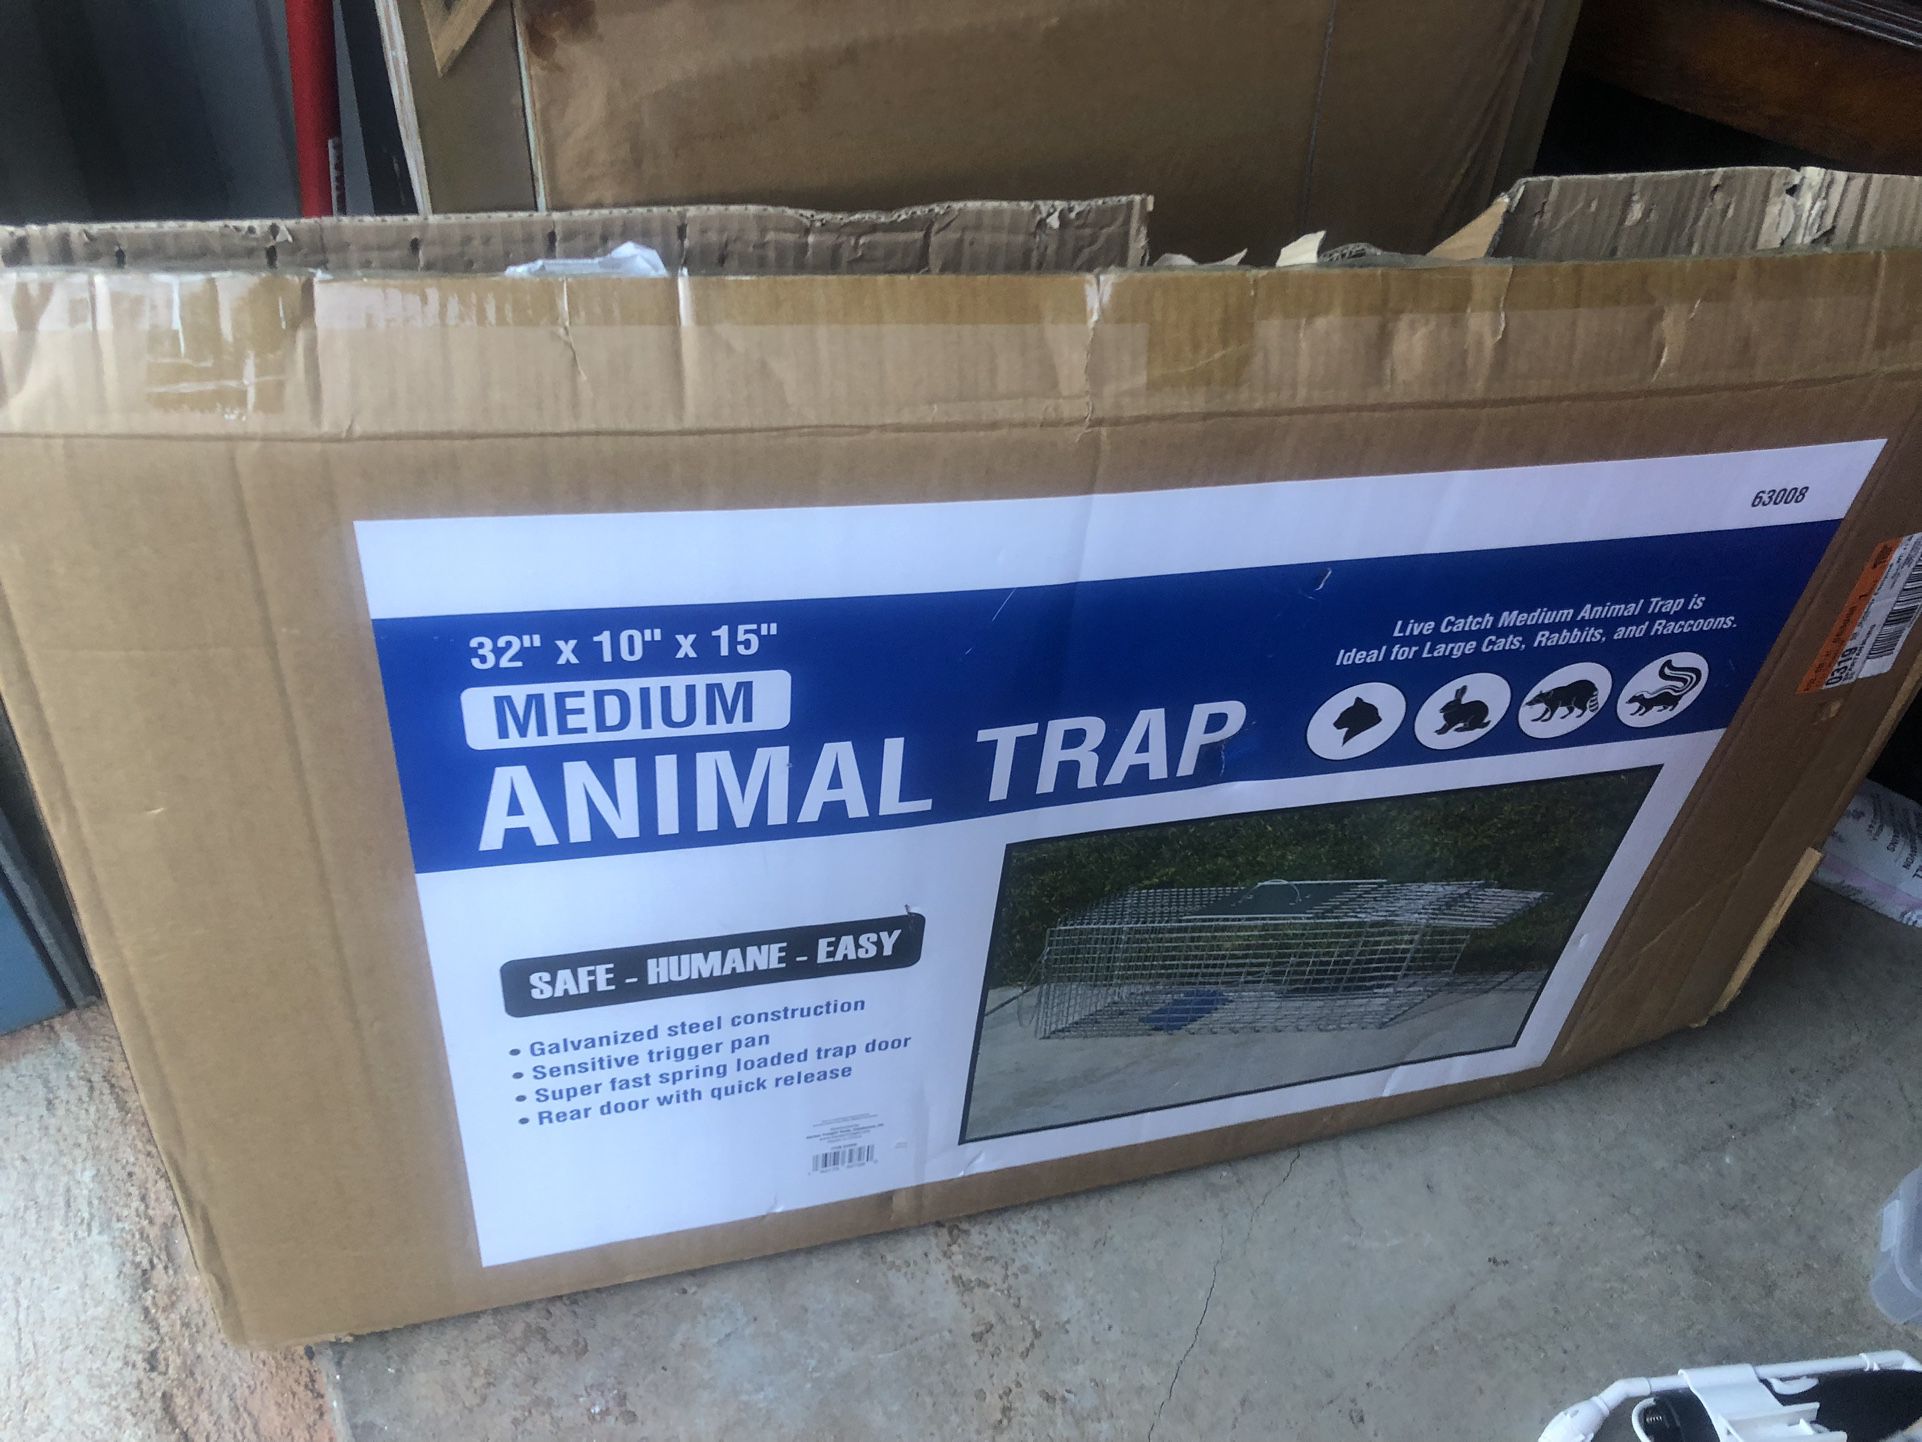 Medium Size Animal Trap $10